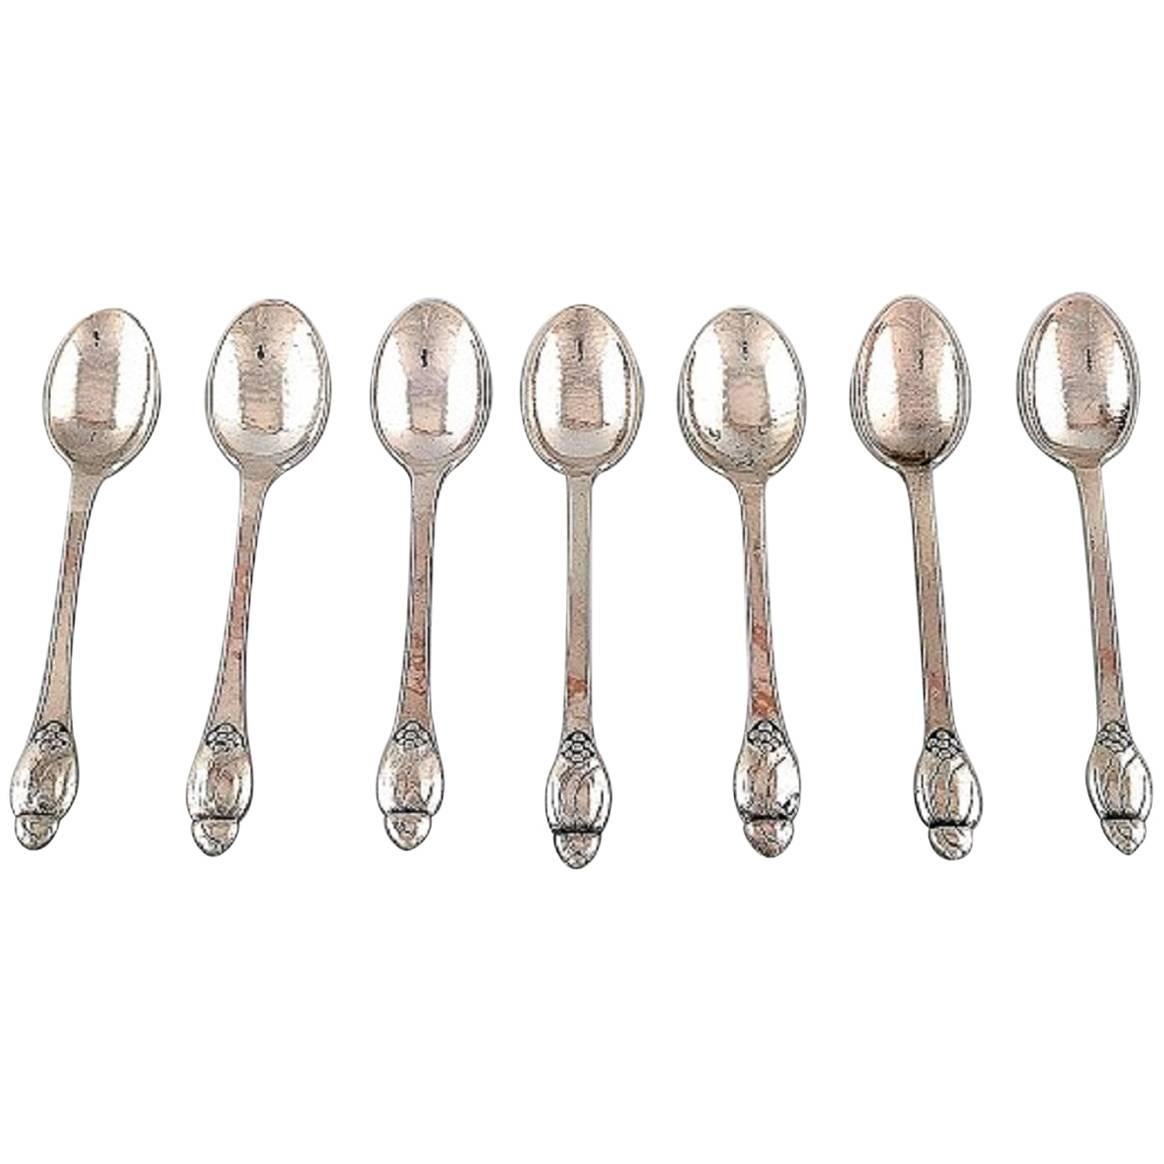 Evald Nielsen Number 6, Teaspoon in Silver. 7 Spoons in Stock. Denmark 1920/30s